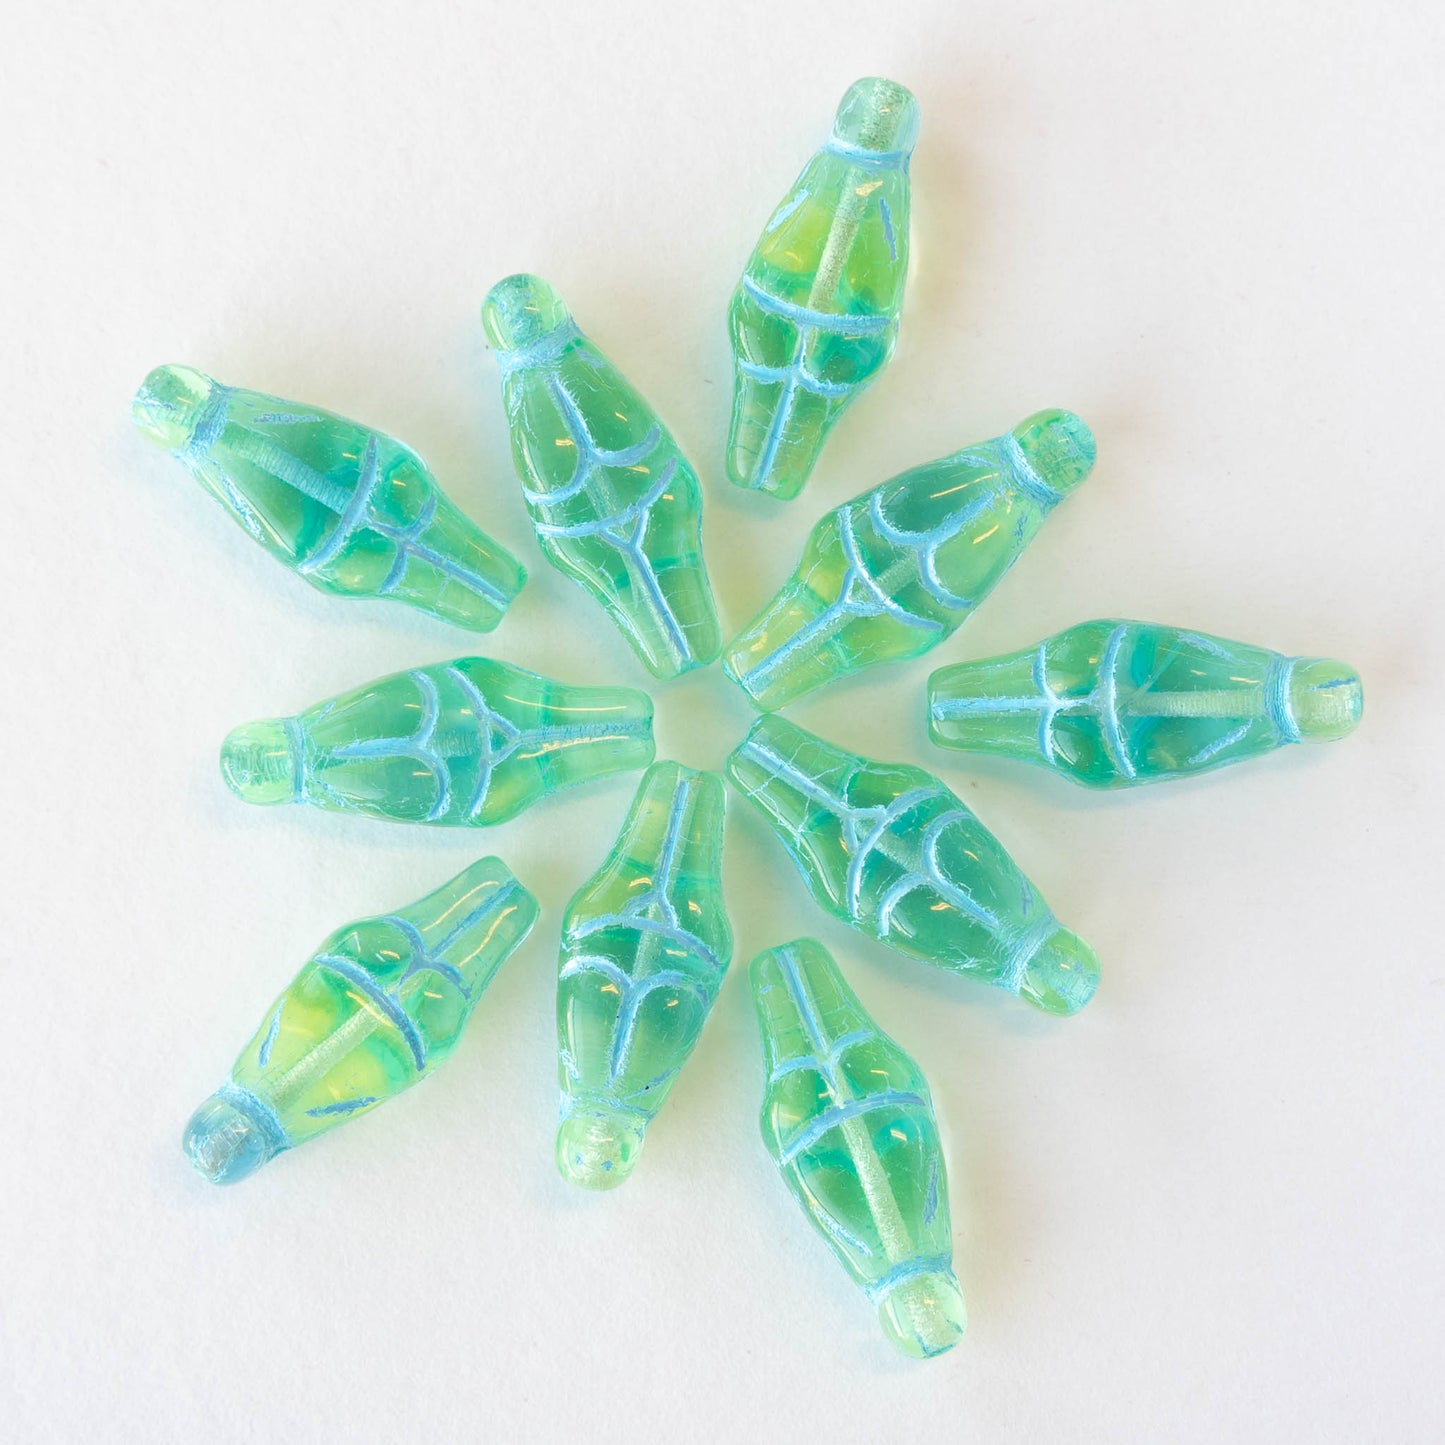 Glass Goddess Beads - Lt. Green and Aqua Mixed Glass - 6